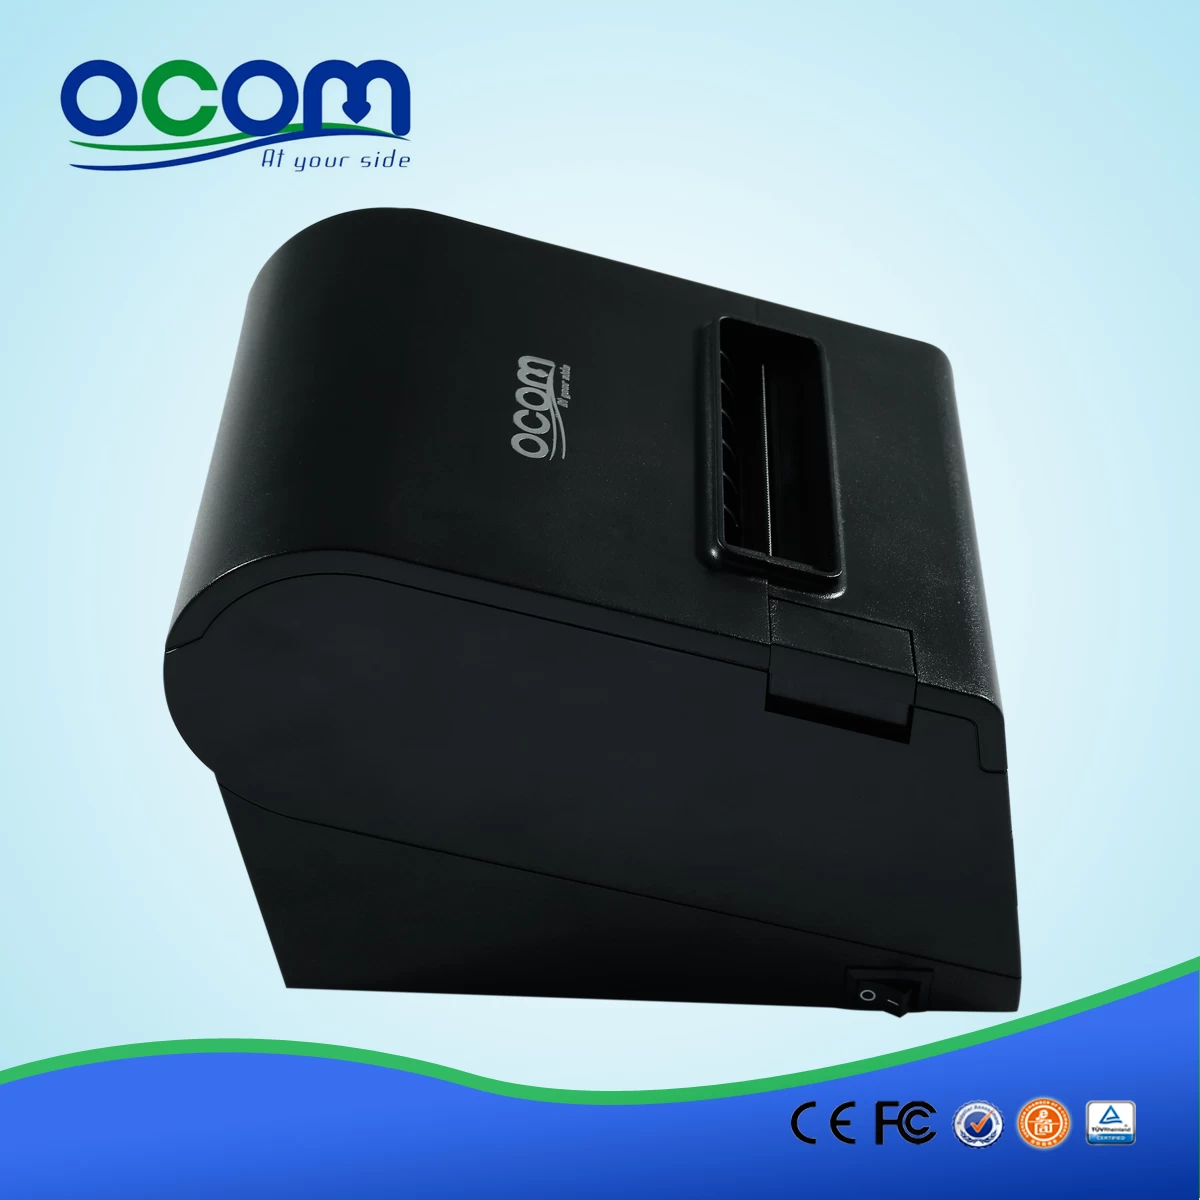 80mm Auto cutter POS bill printer-OCPP-804-URL